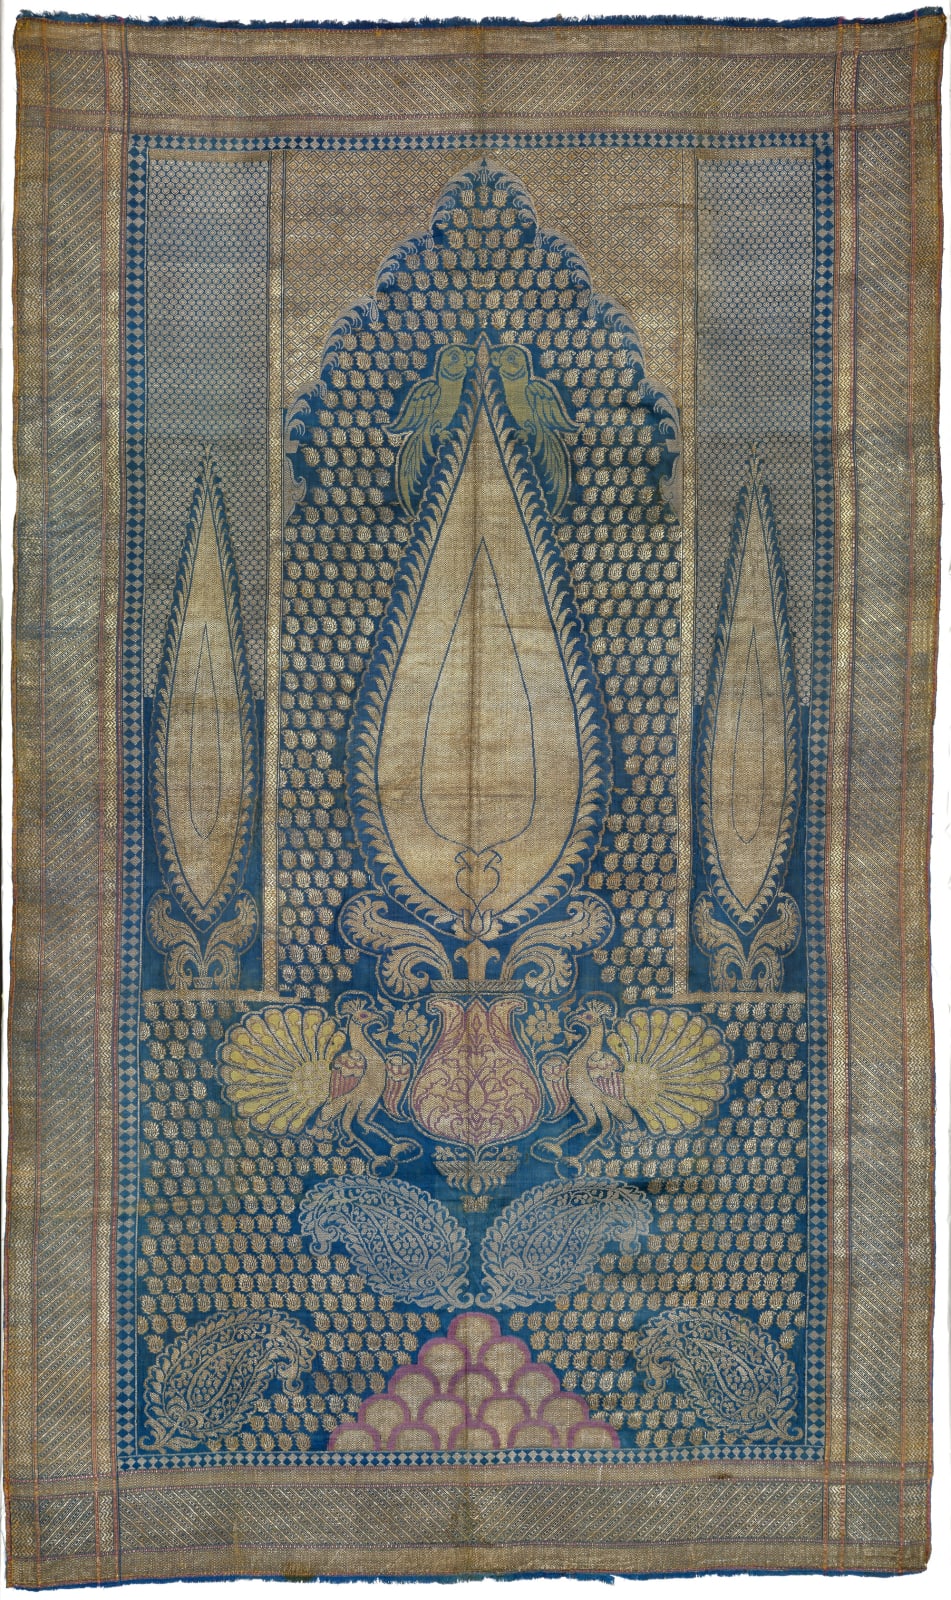 Silk Hanging with Cyprus Trees and Peacocks, India, Varanasi (Benares), 1850-1900